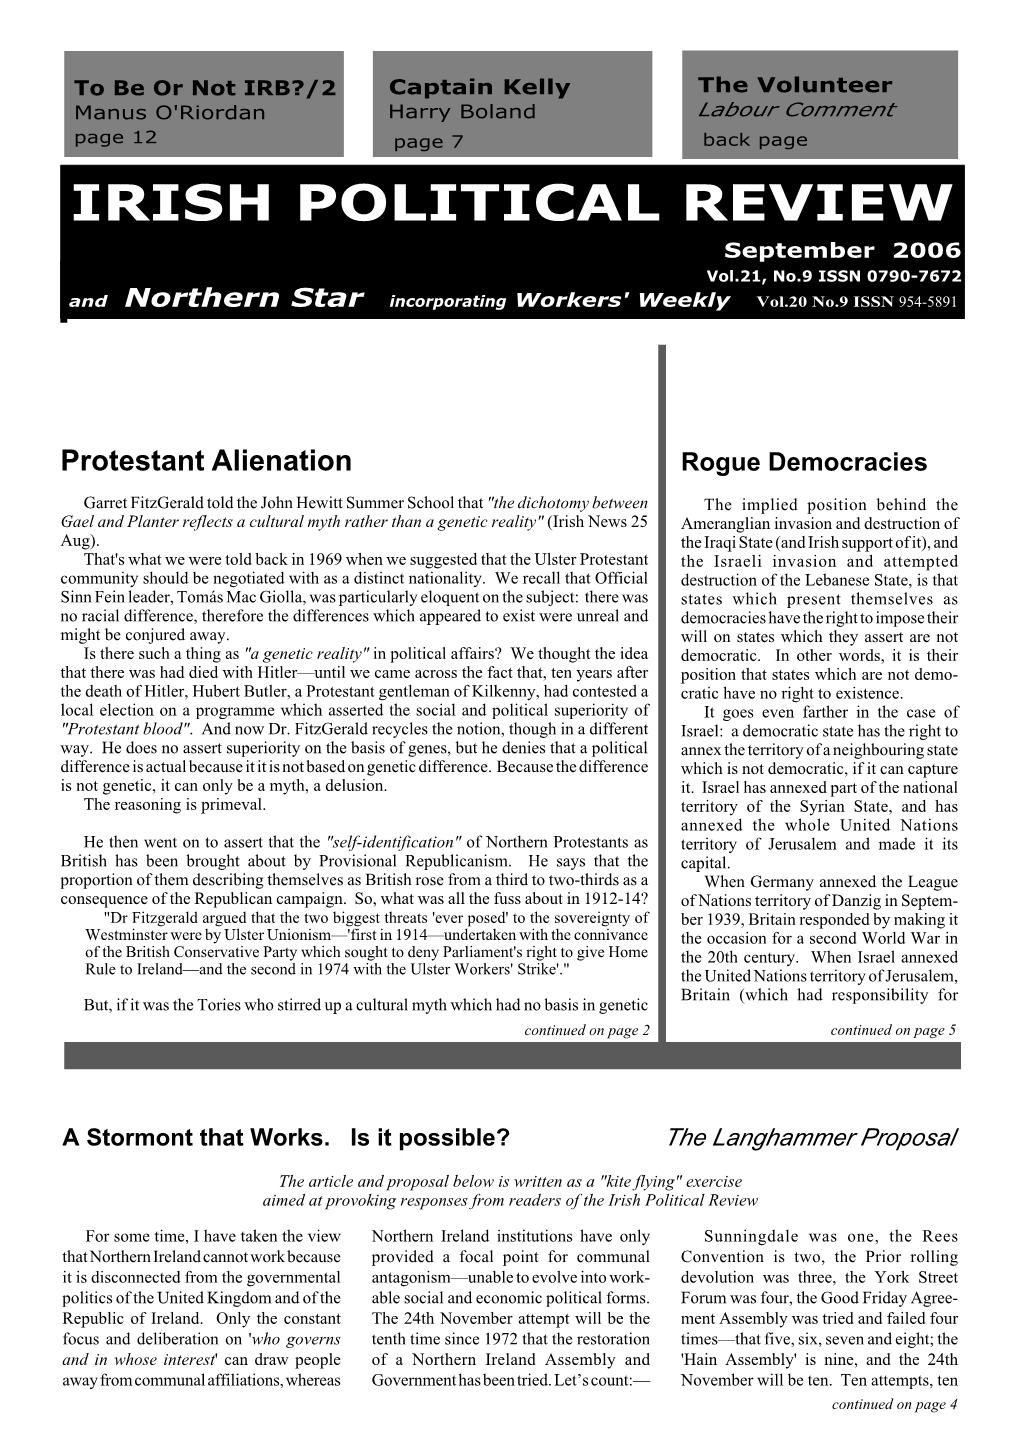 Irish Political Review, September 2006